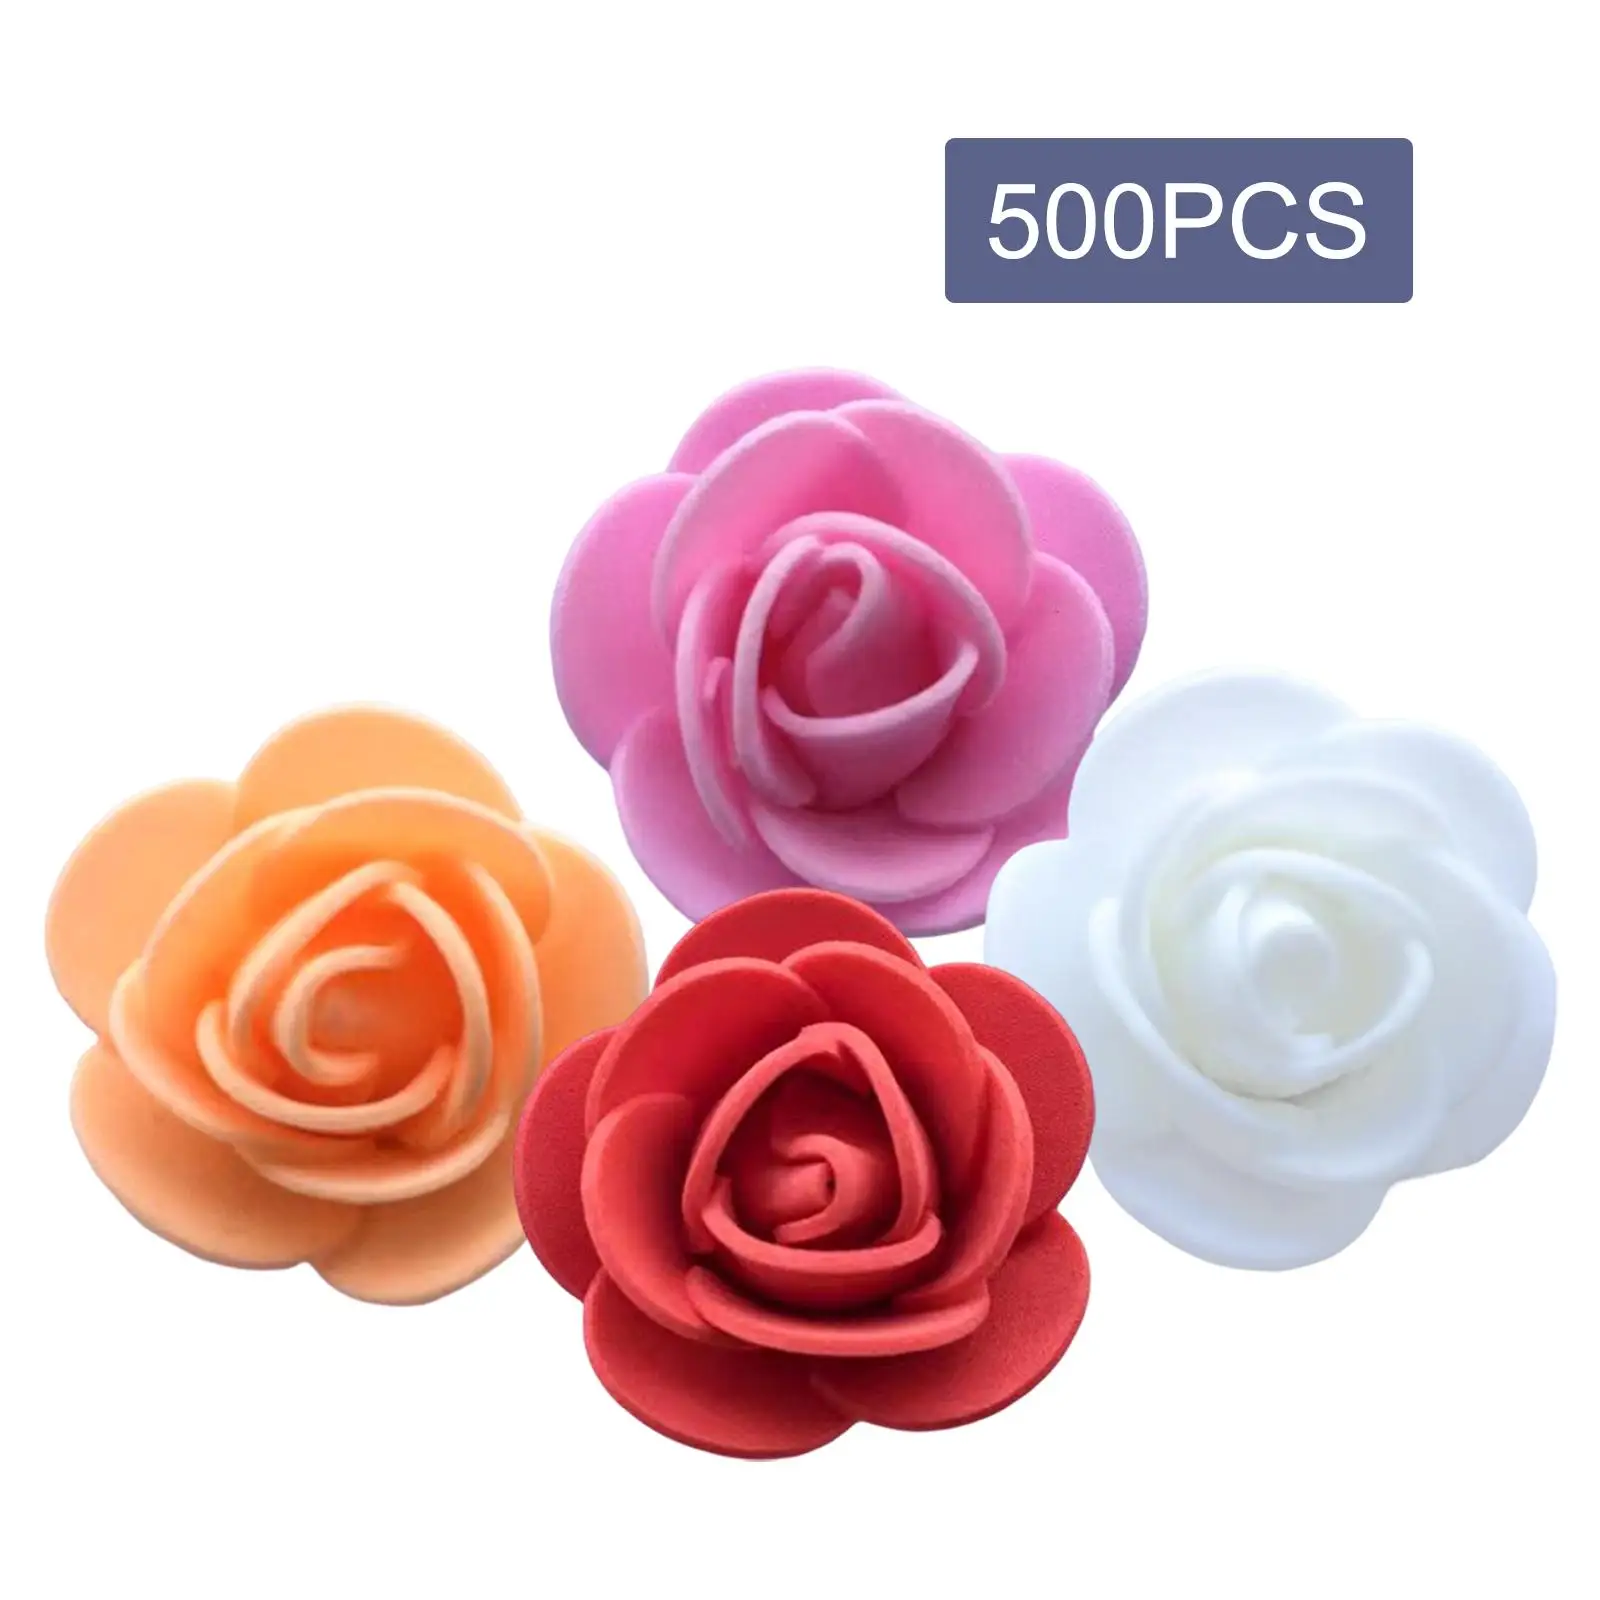 500 Pieces Mini Artificial Rose Heads Flower Arrangement for Wedding DIY Crafts Home Table Decor